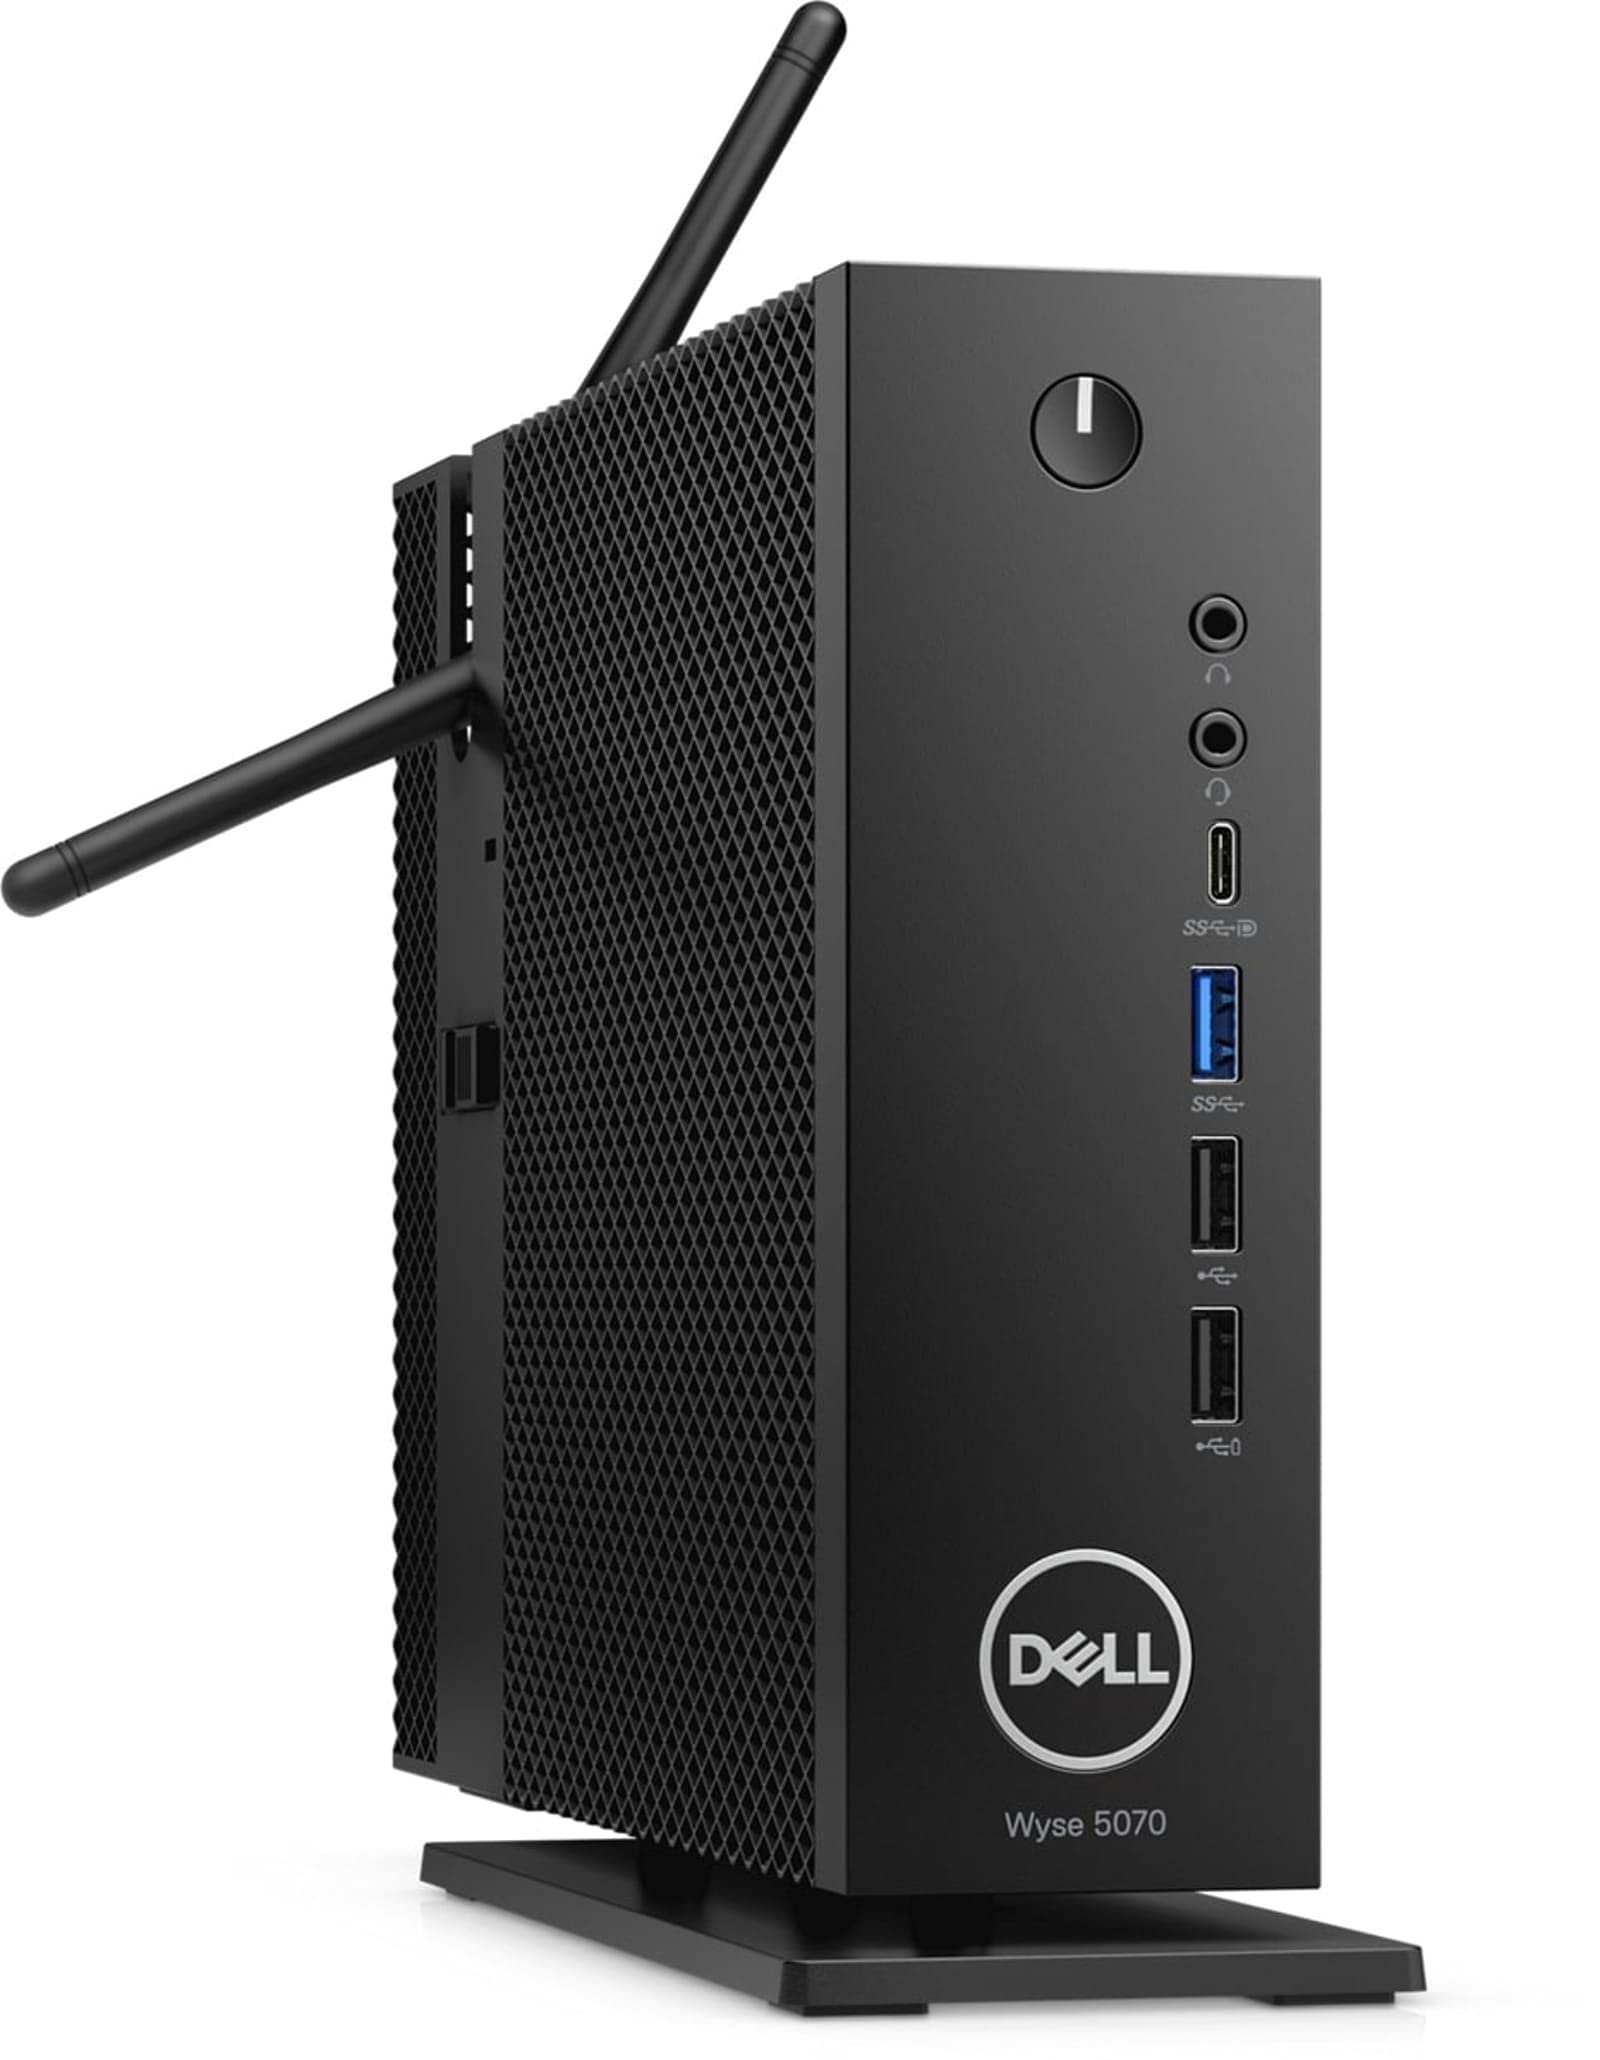 Dell Wyse 5070 Desktop (2018) | Core Celeron - 32GB SSD - 4GB RAM | 4 Cores (Renewed)